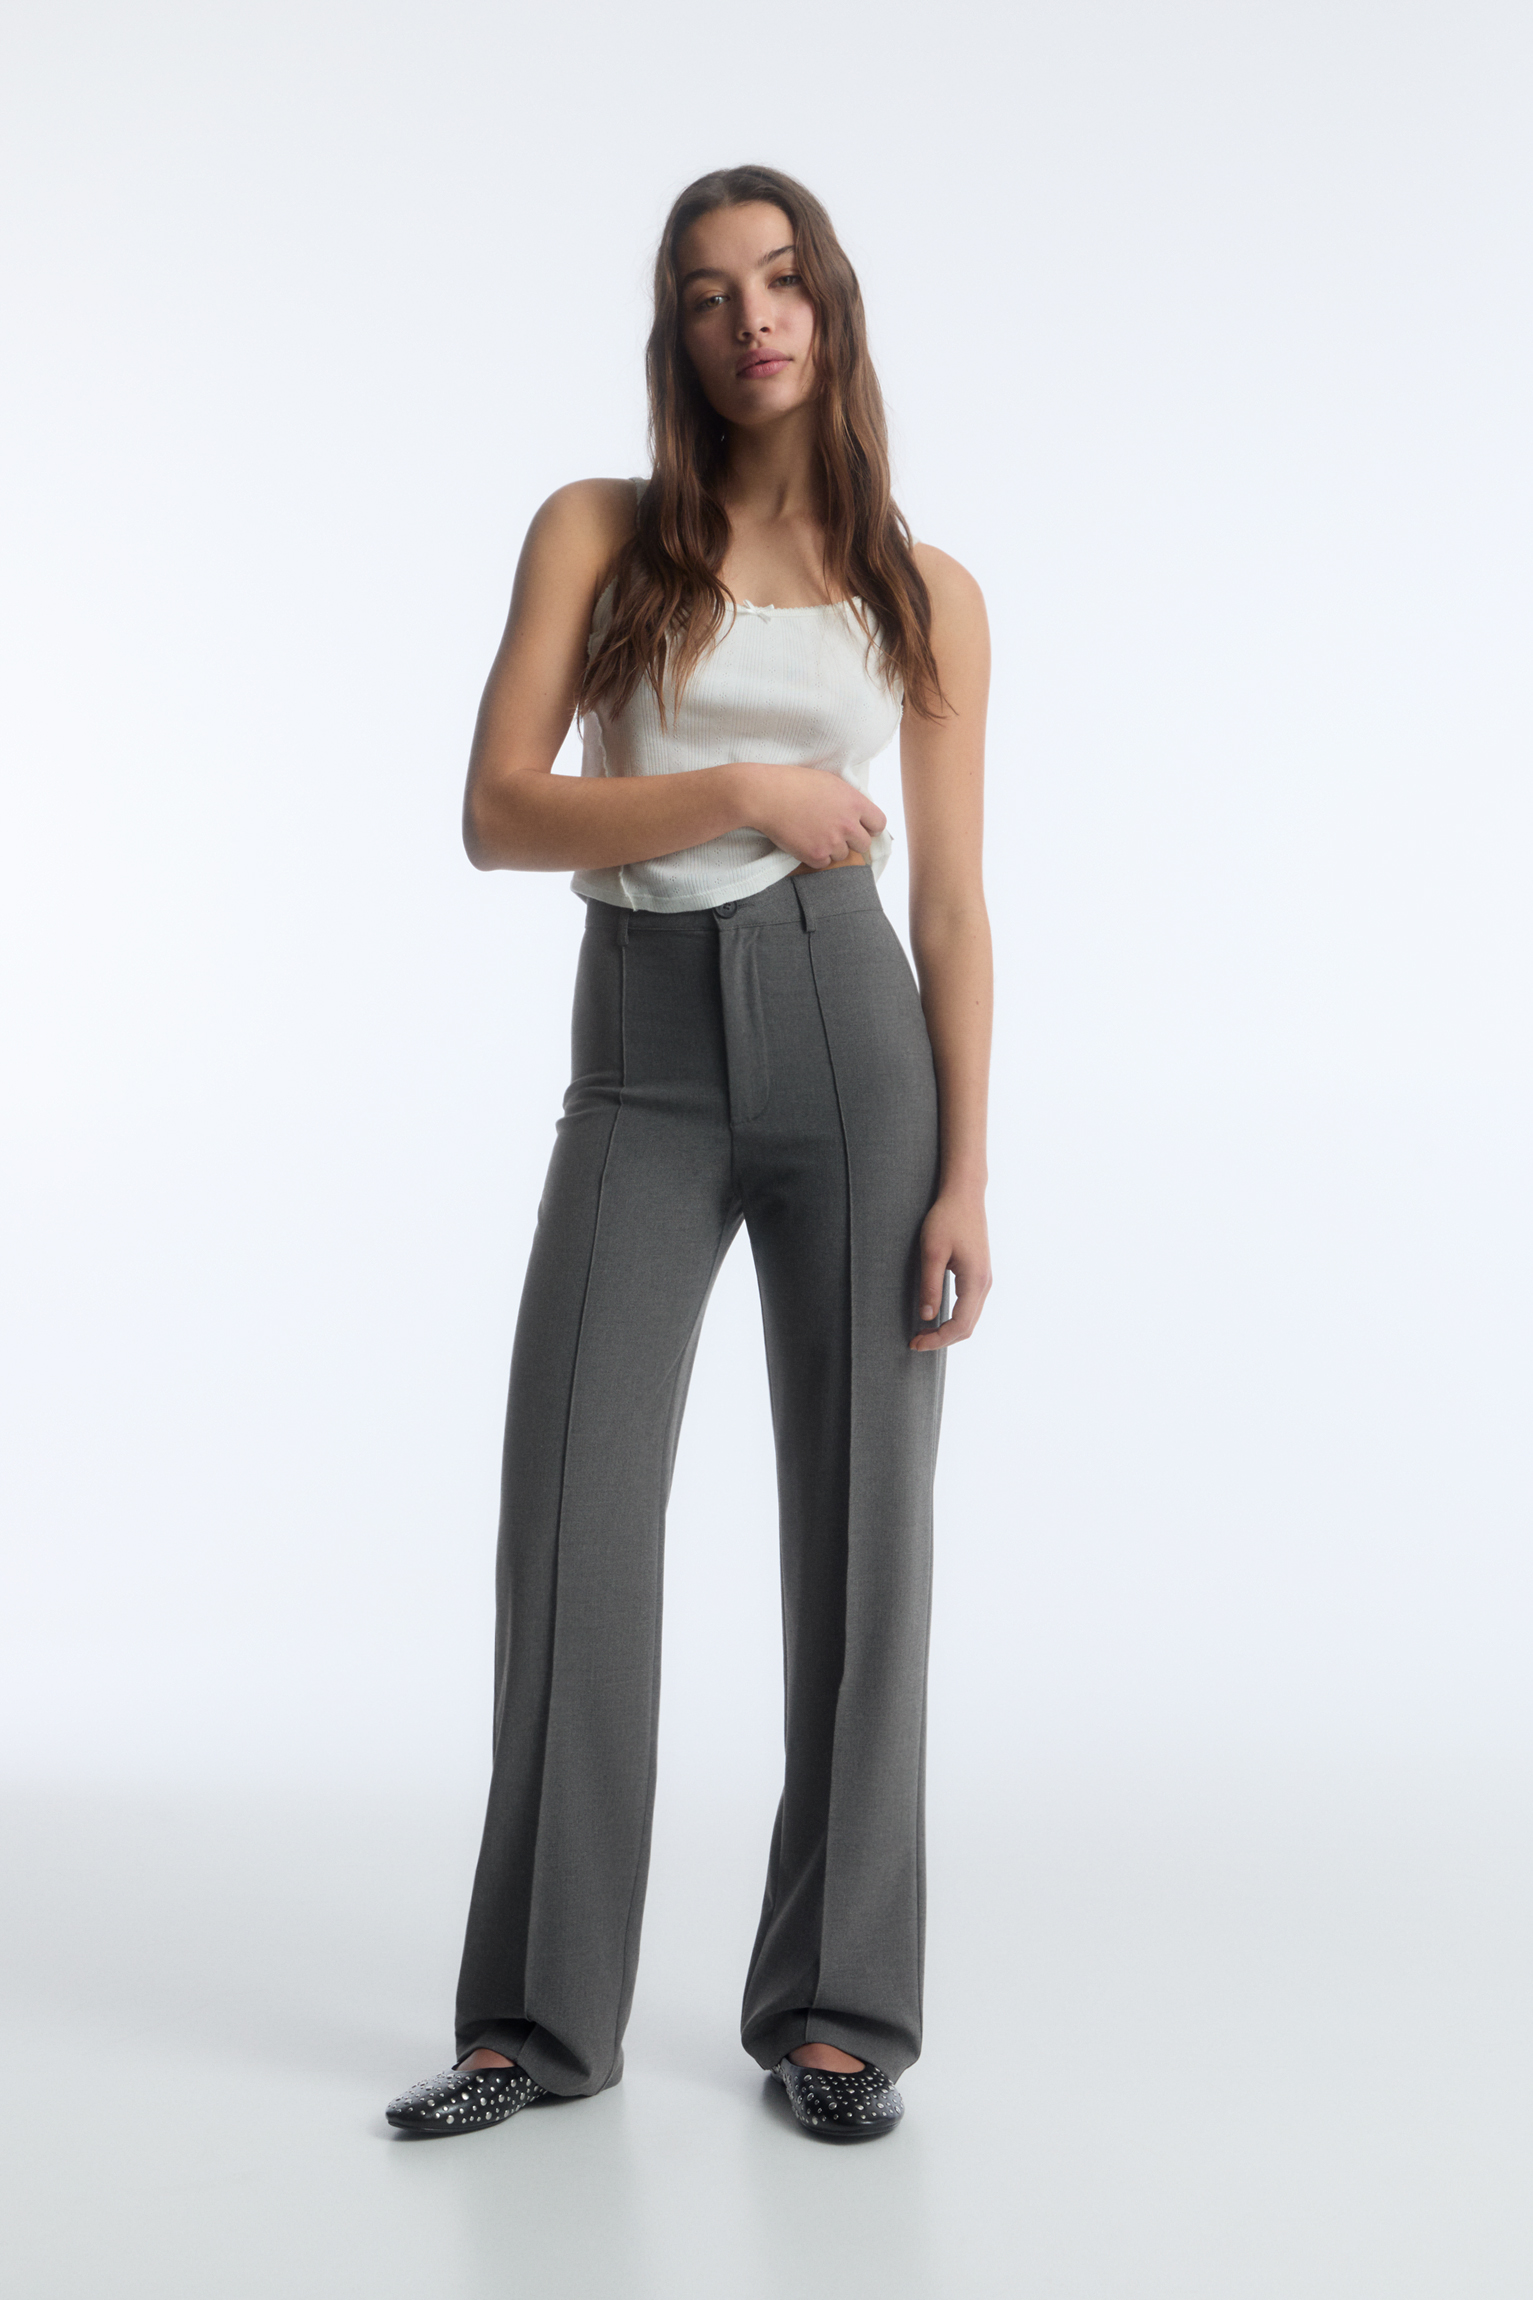 Bottega Veneta® Women's Structured Cotton Pants in Black. Shop online now.